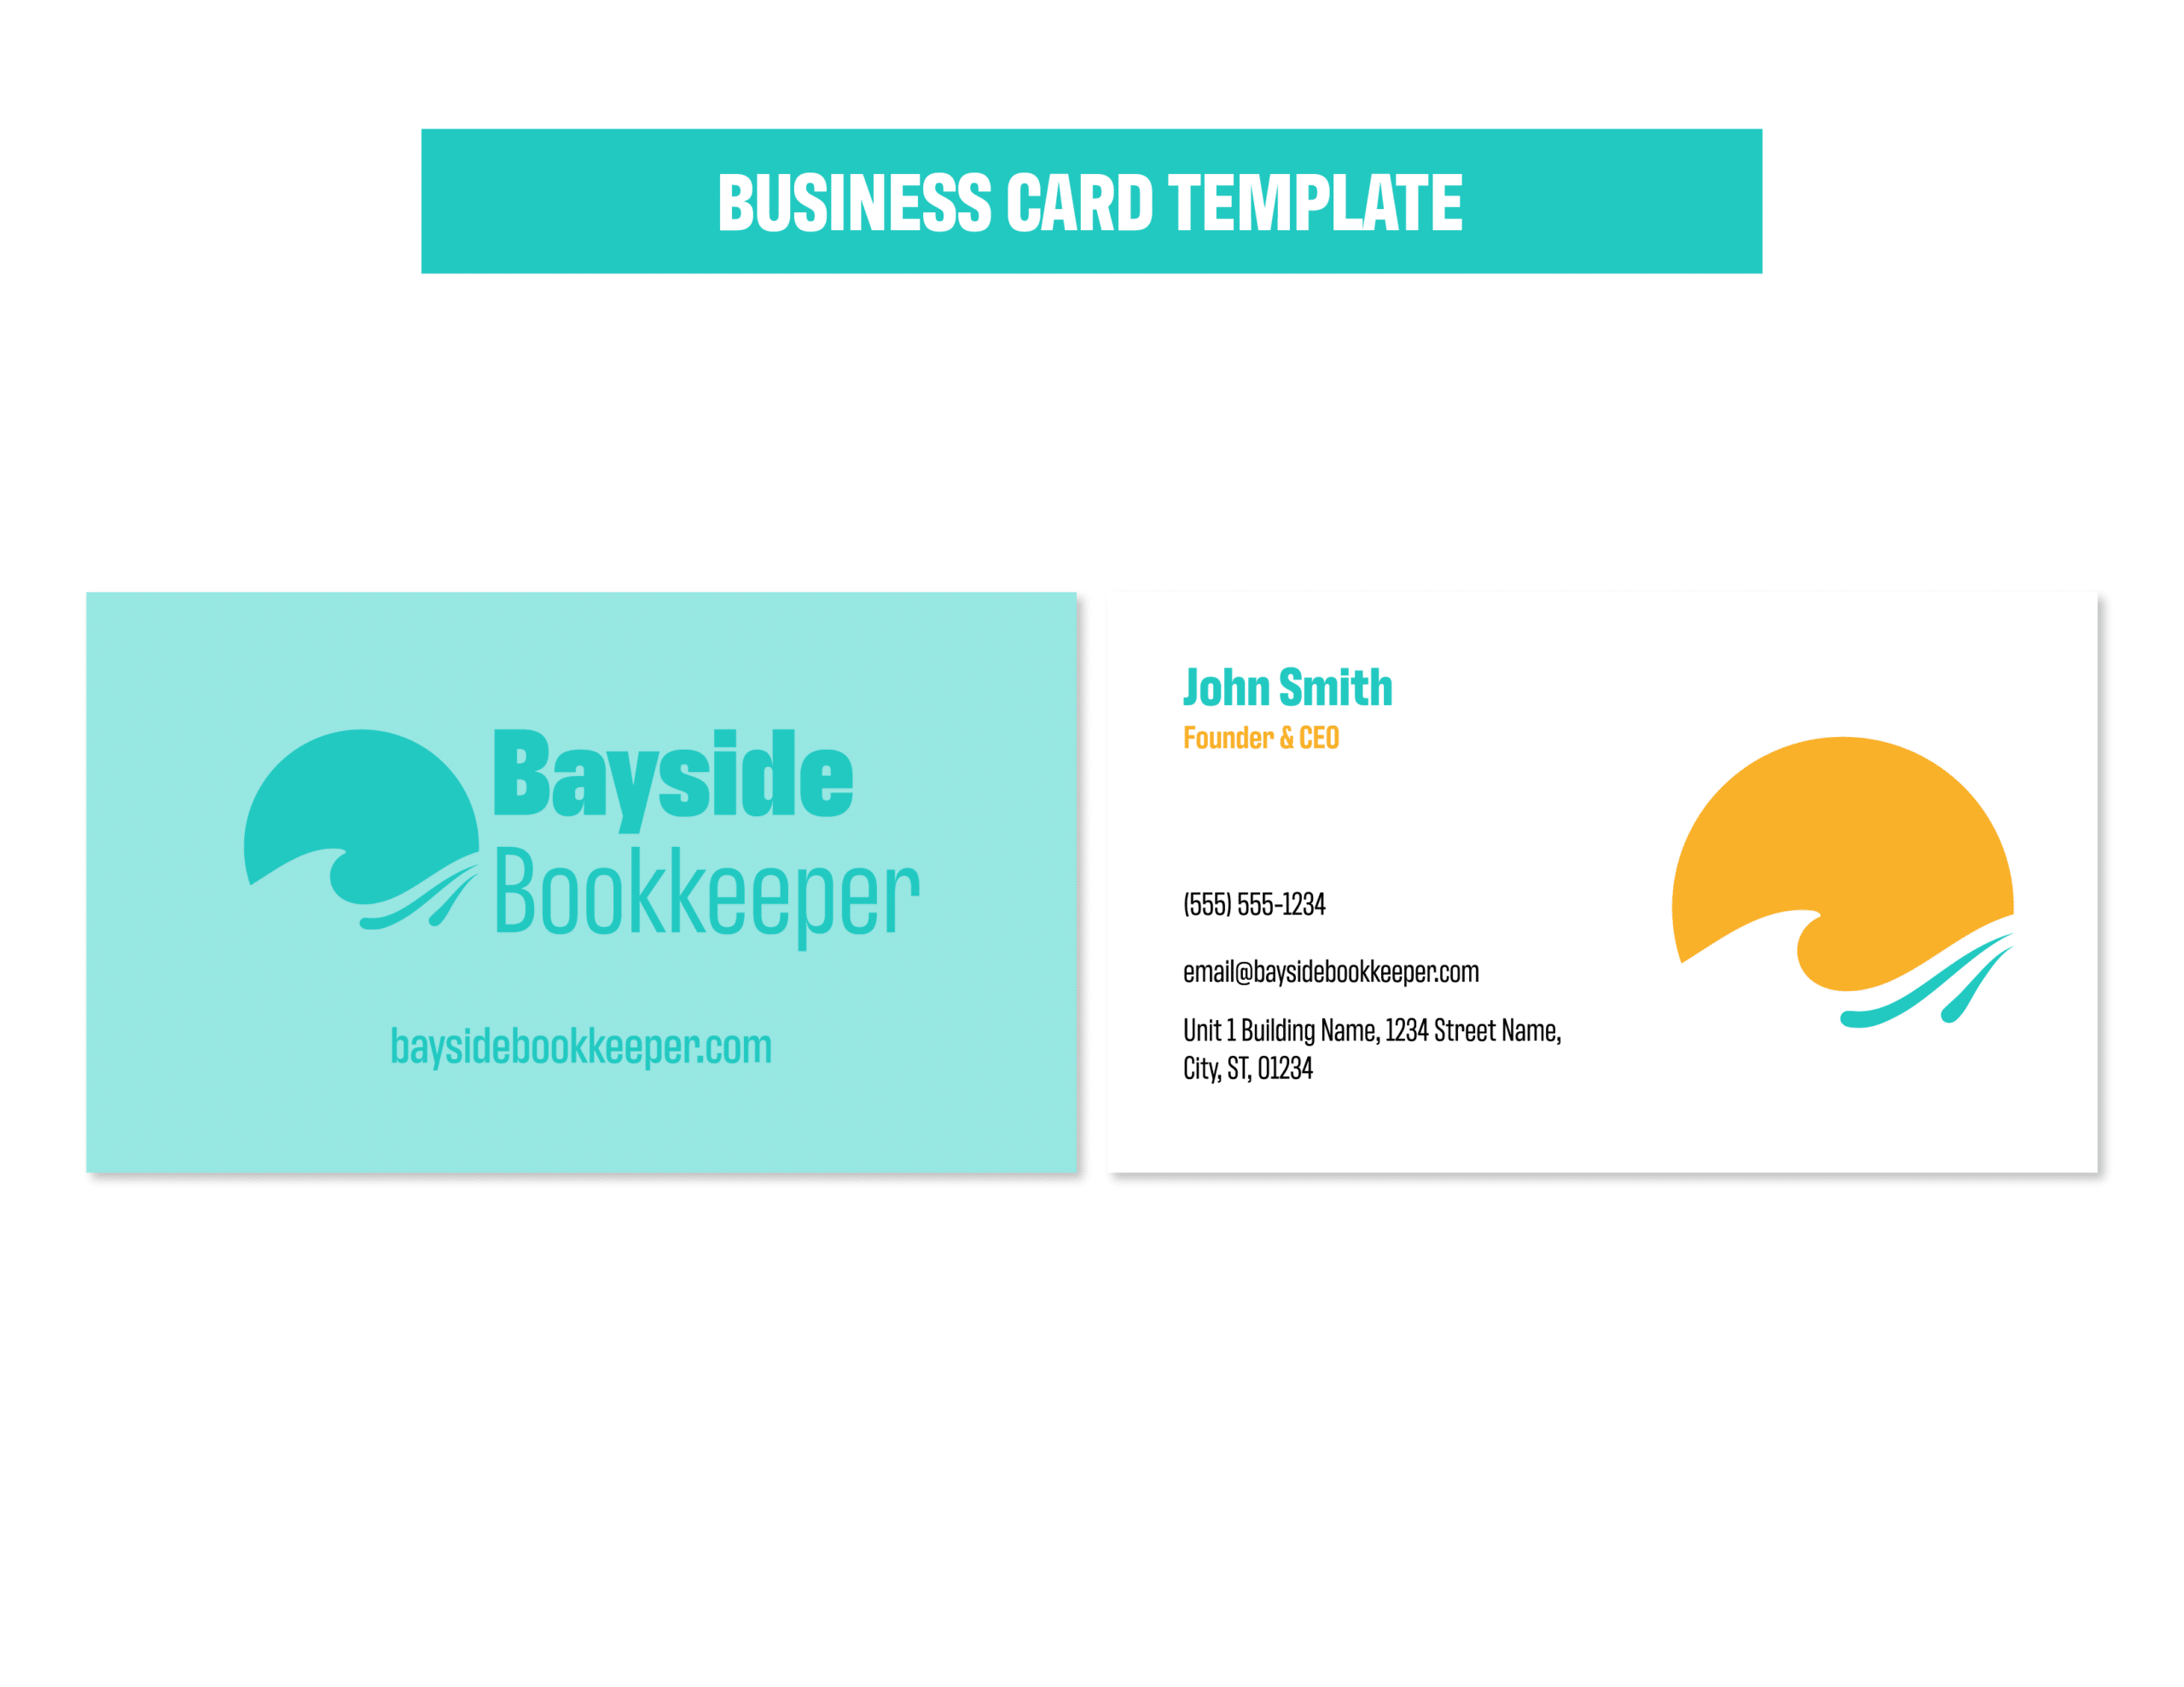 04BaysideBK_Showcase_Business Card Template